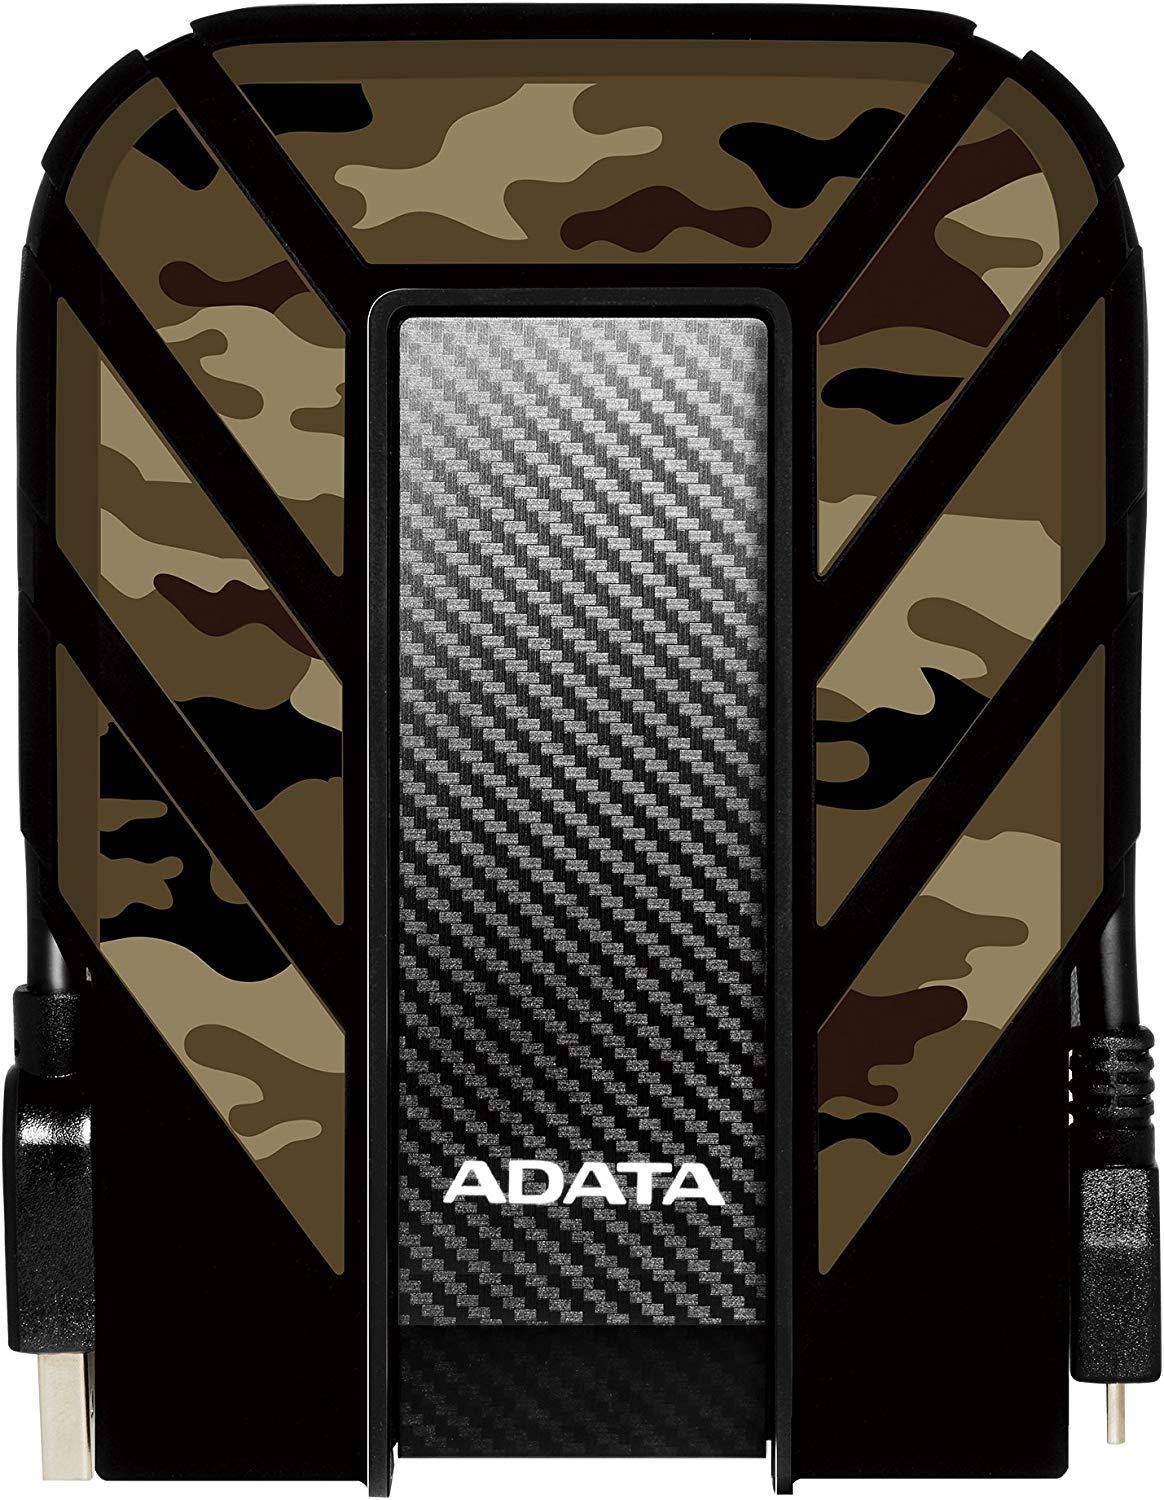 ADATA HD710M Pro 1TB Military Shockproof External Hard Drive zoom image